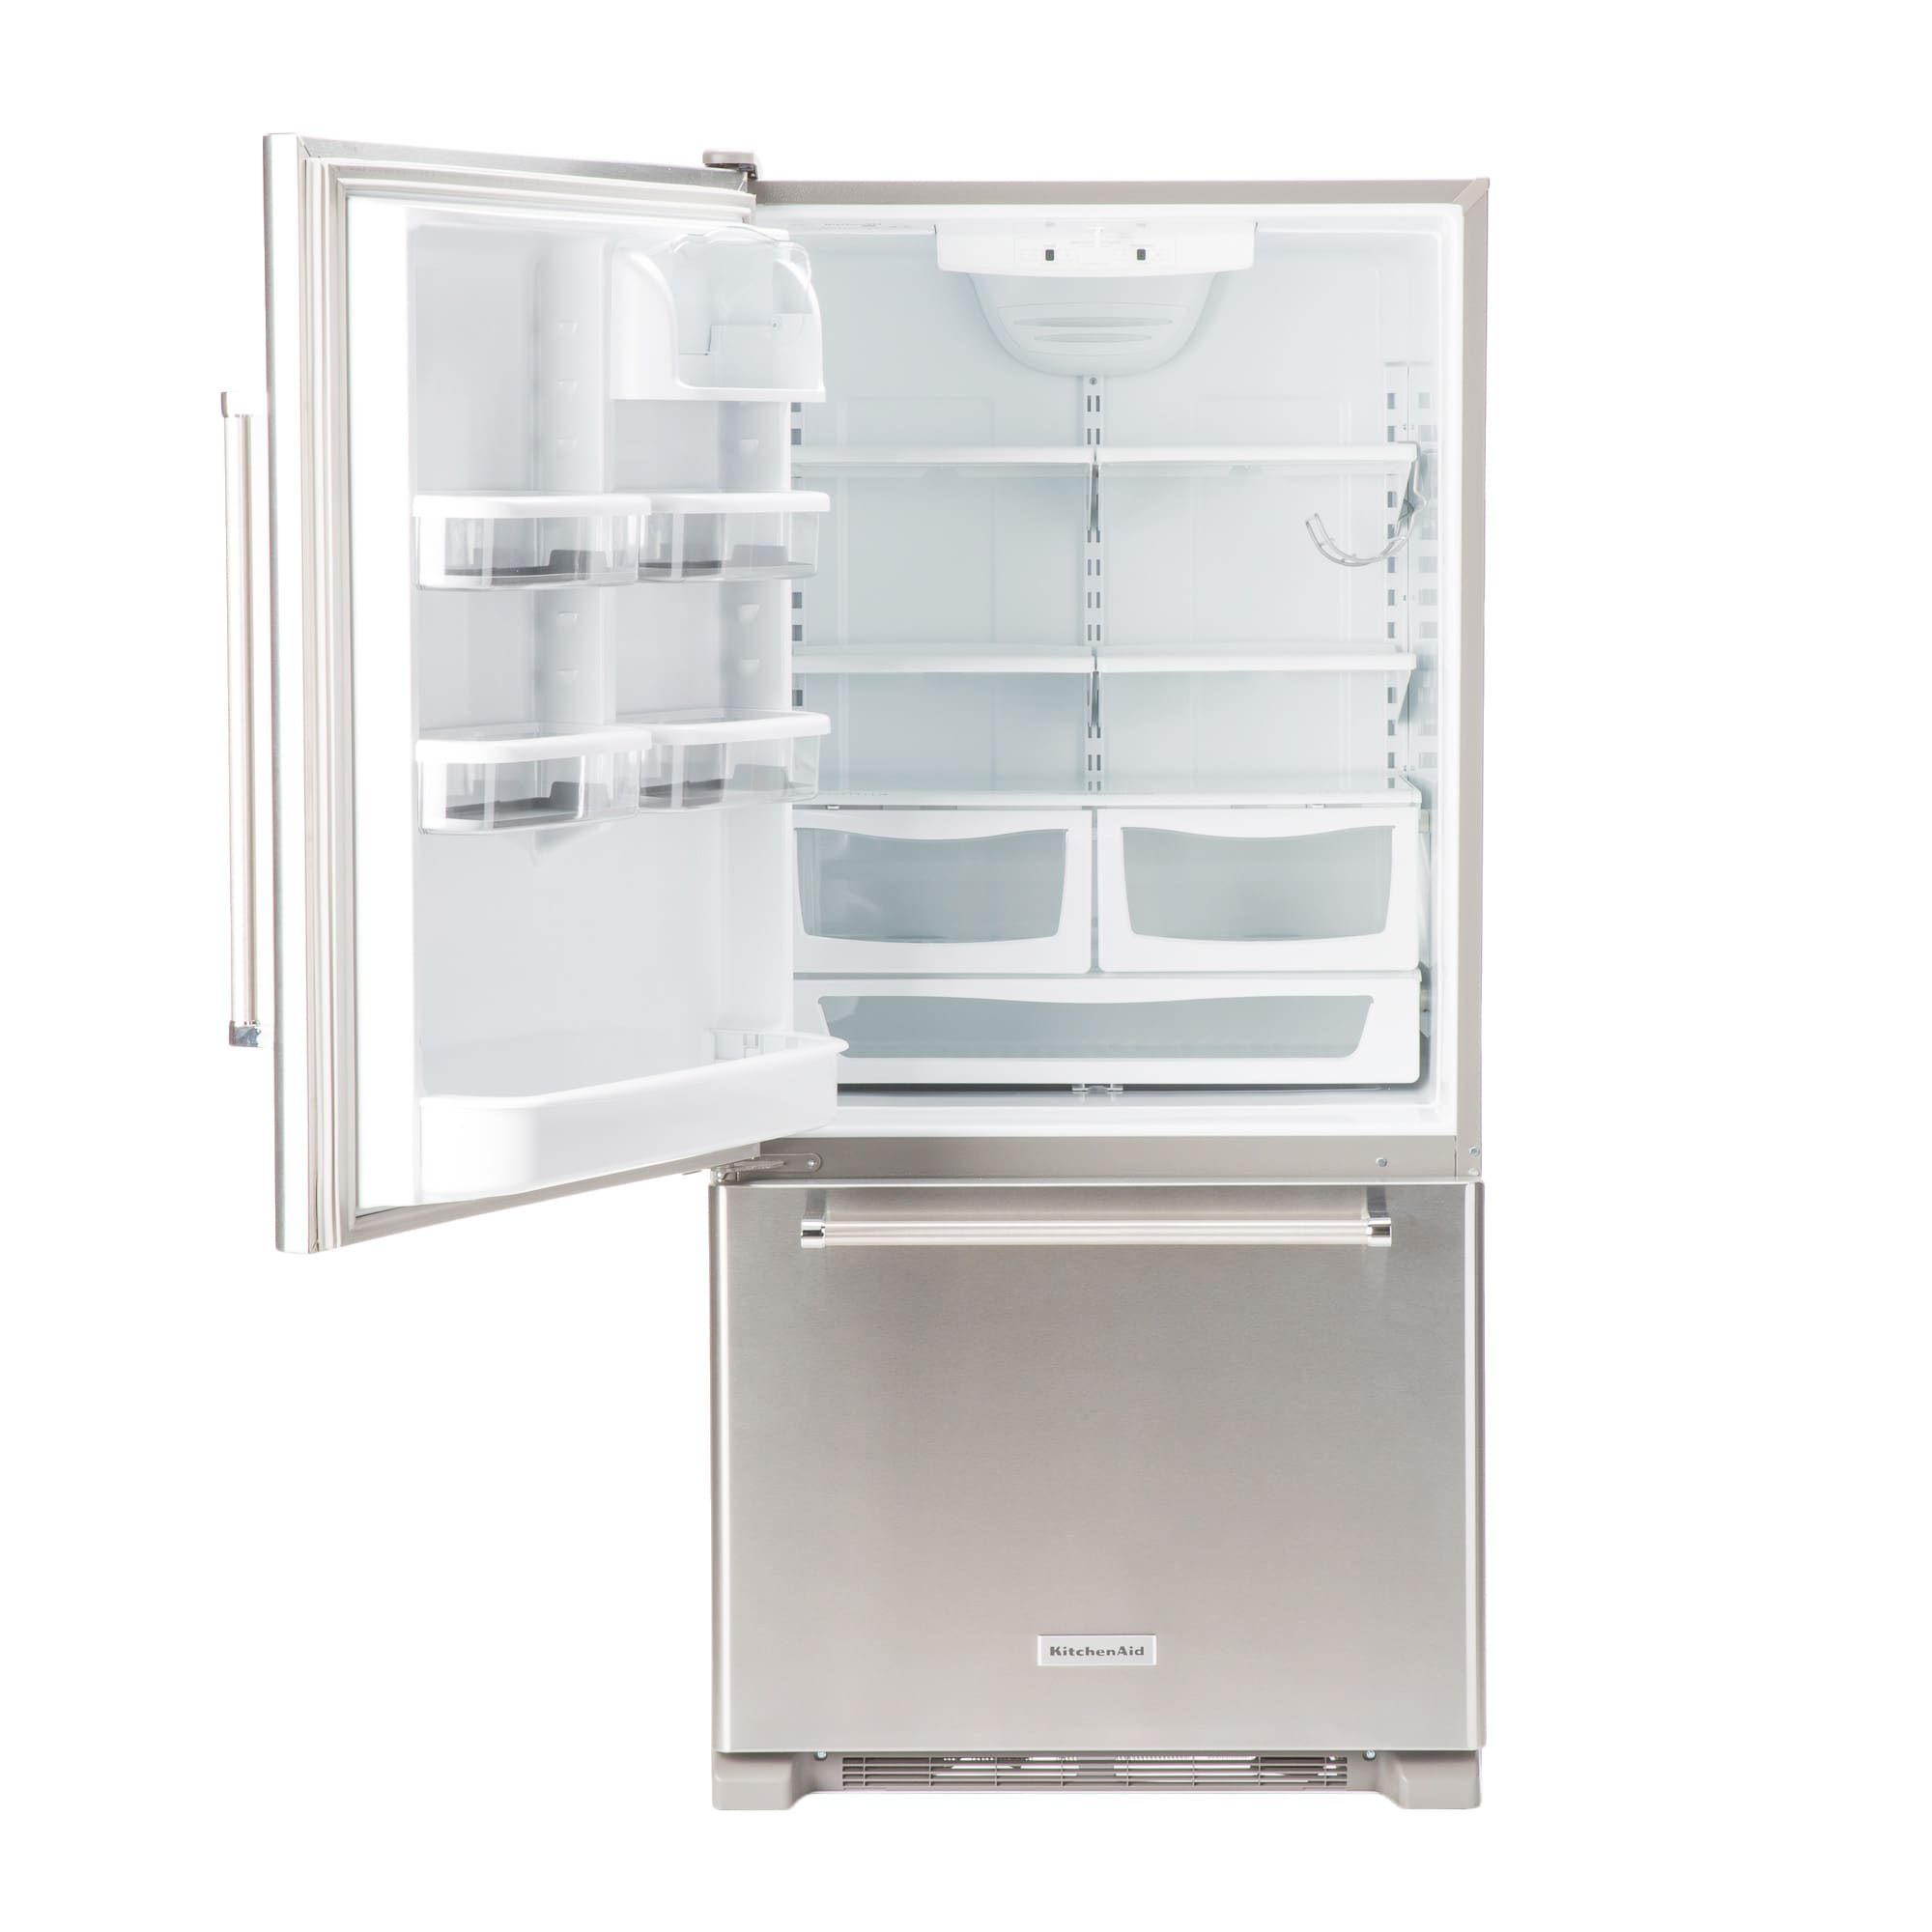 KitchenAid® 18.67 Cu. Ft. Stainless Steel Bottom Freezer